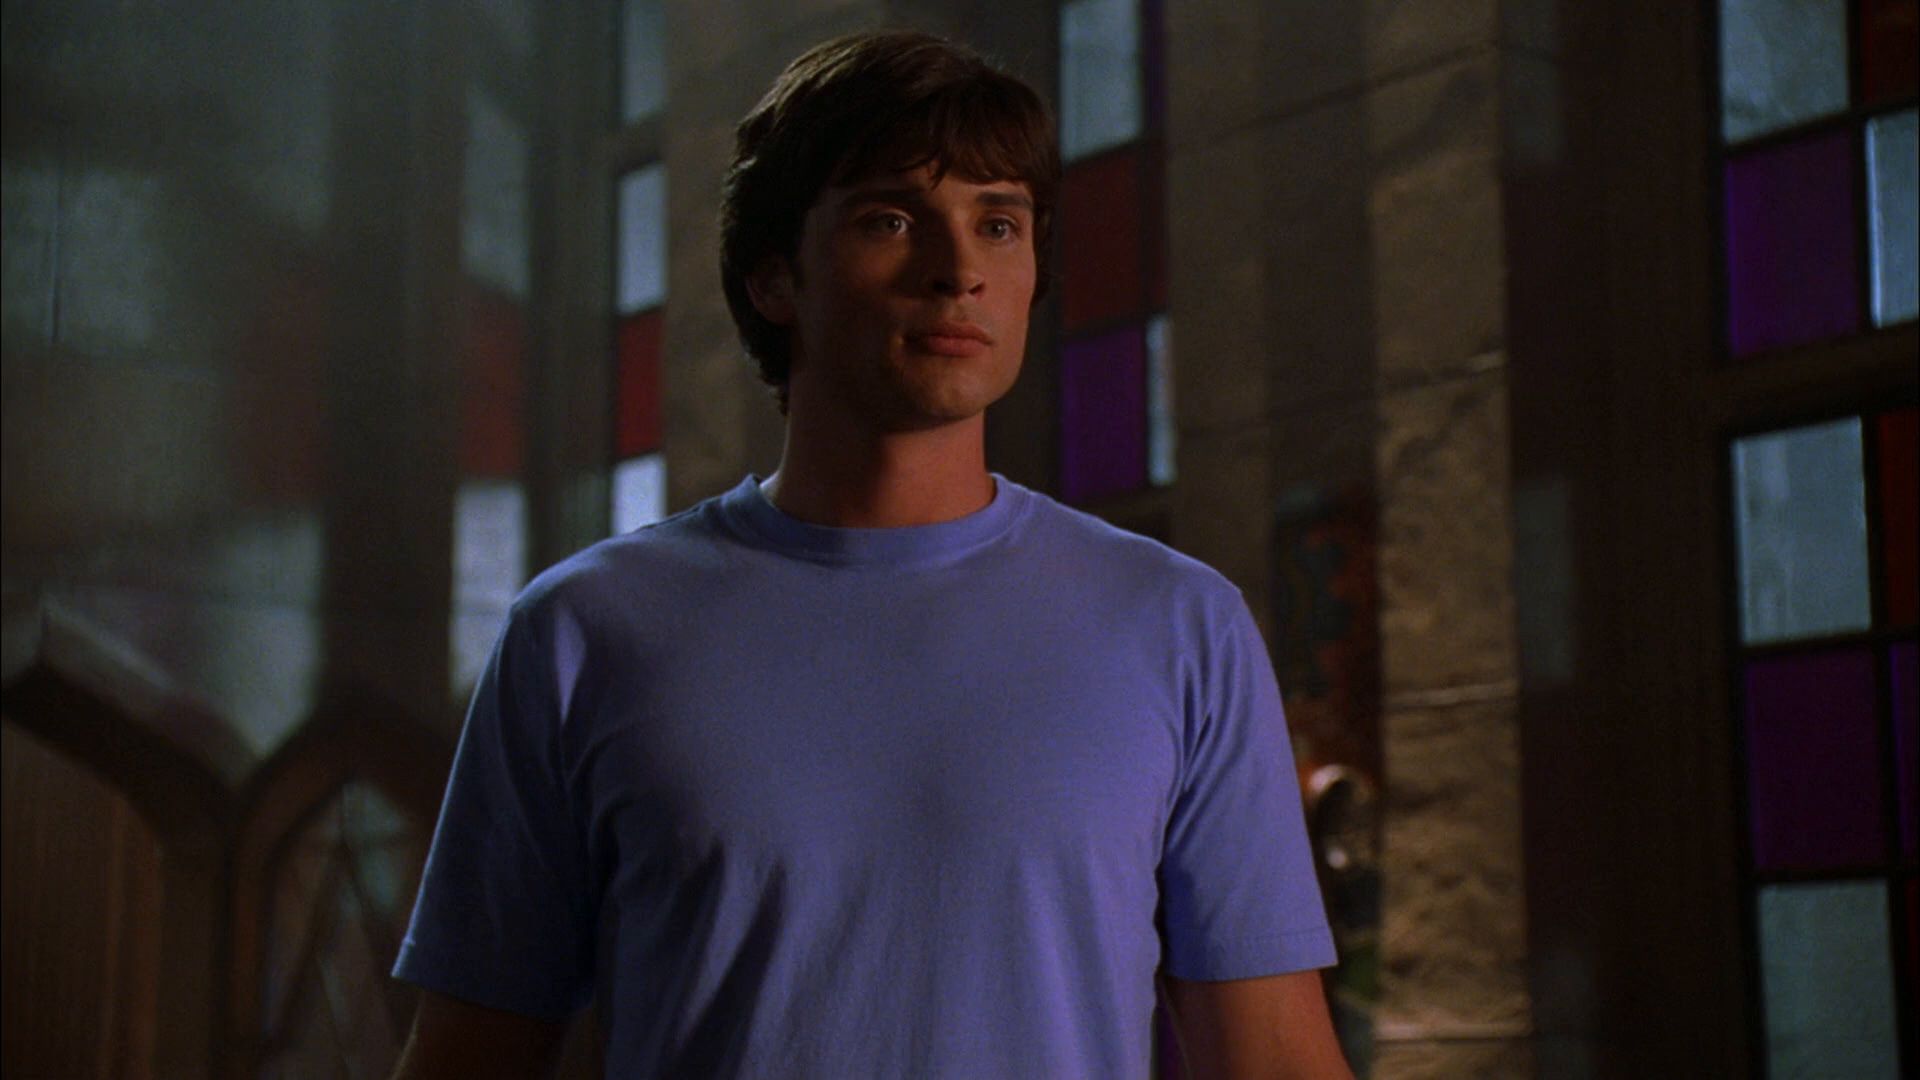 Smallville background